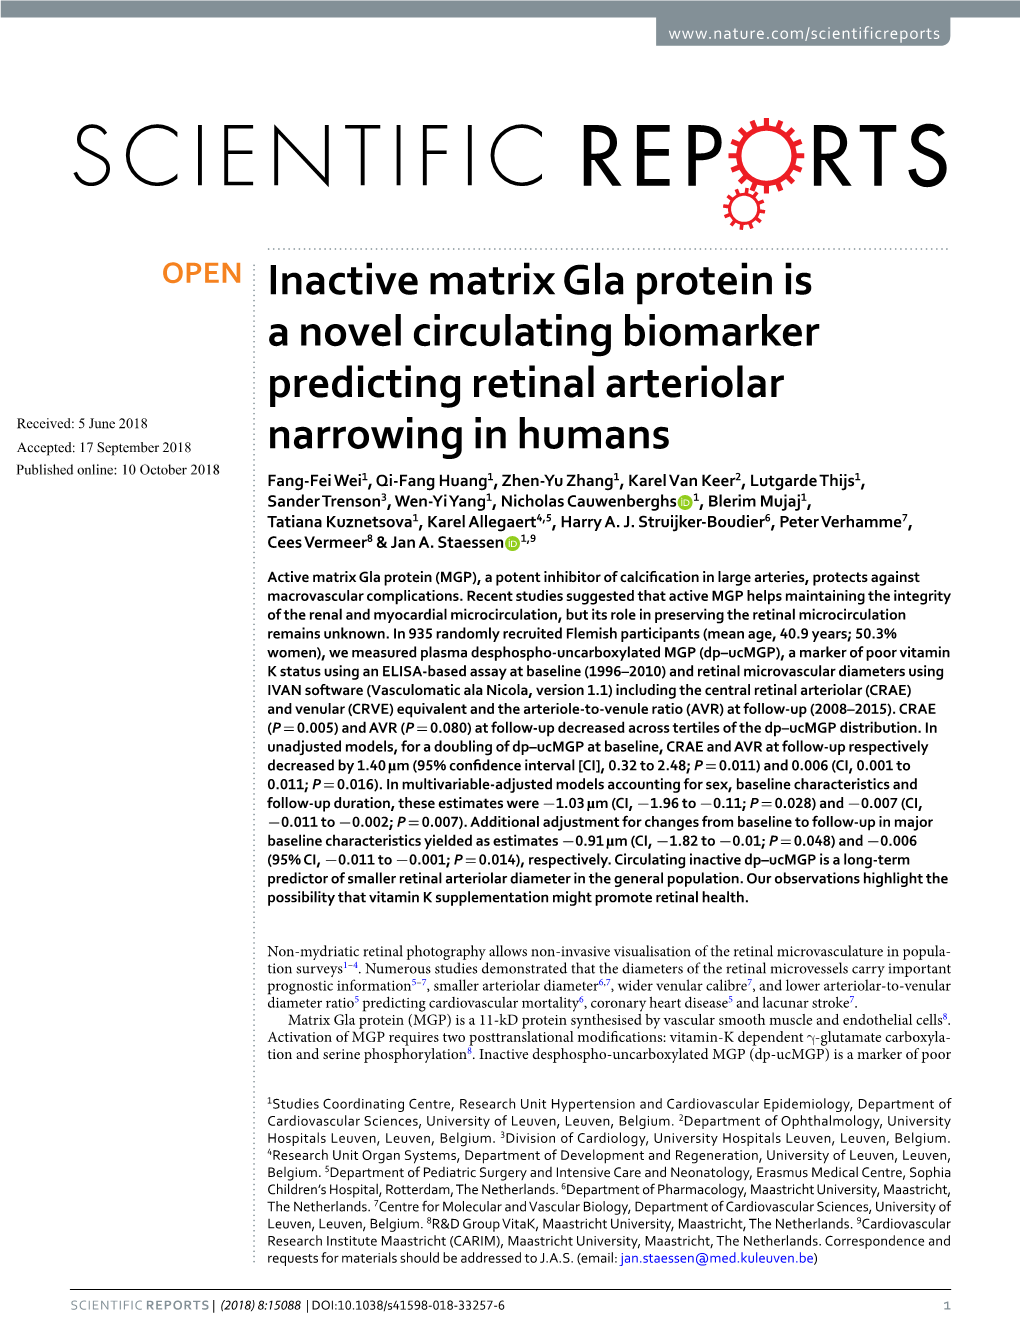 Inactive Matrix Gla Protein Is a Novel Circulating Biomarker Predicting